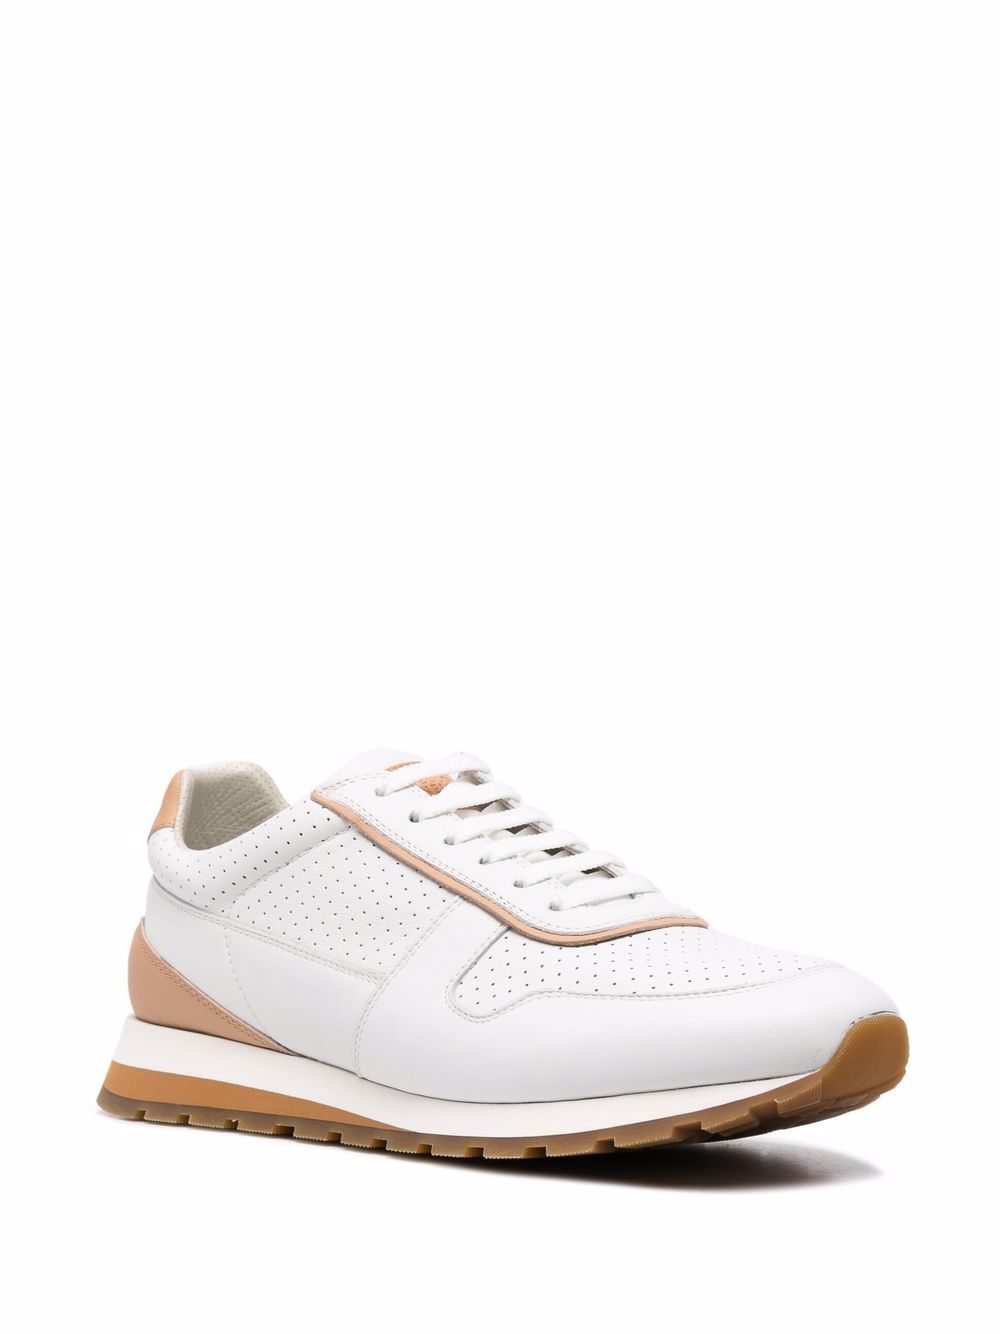 Brunello Cucinelli low-top Leather Sneakers - Farfetch